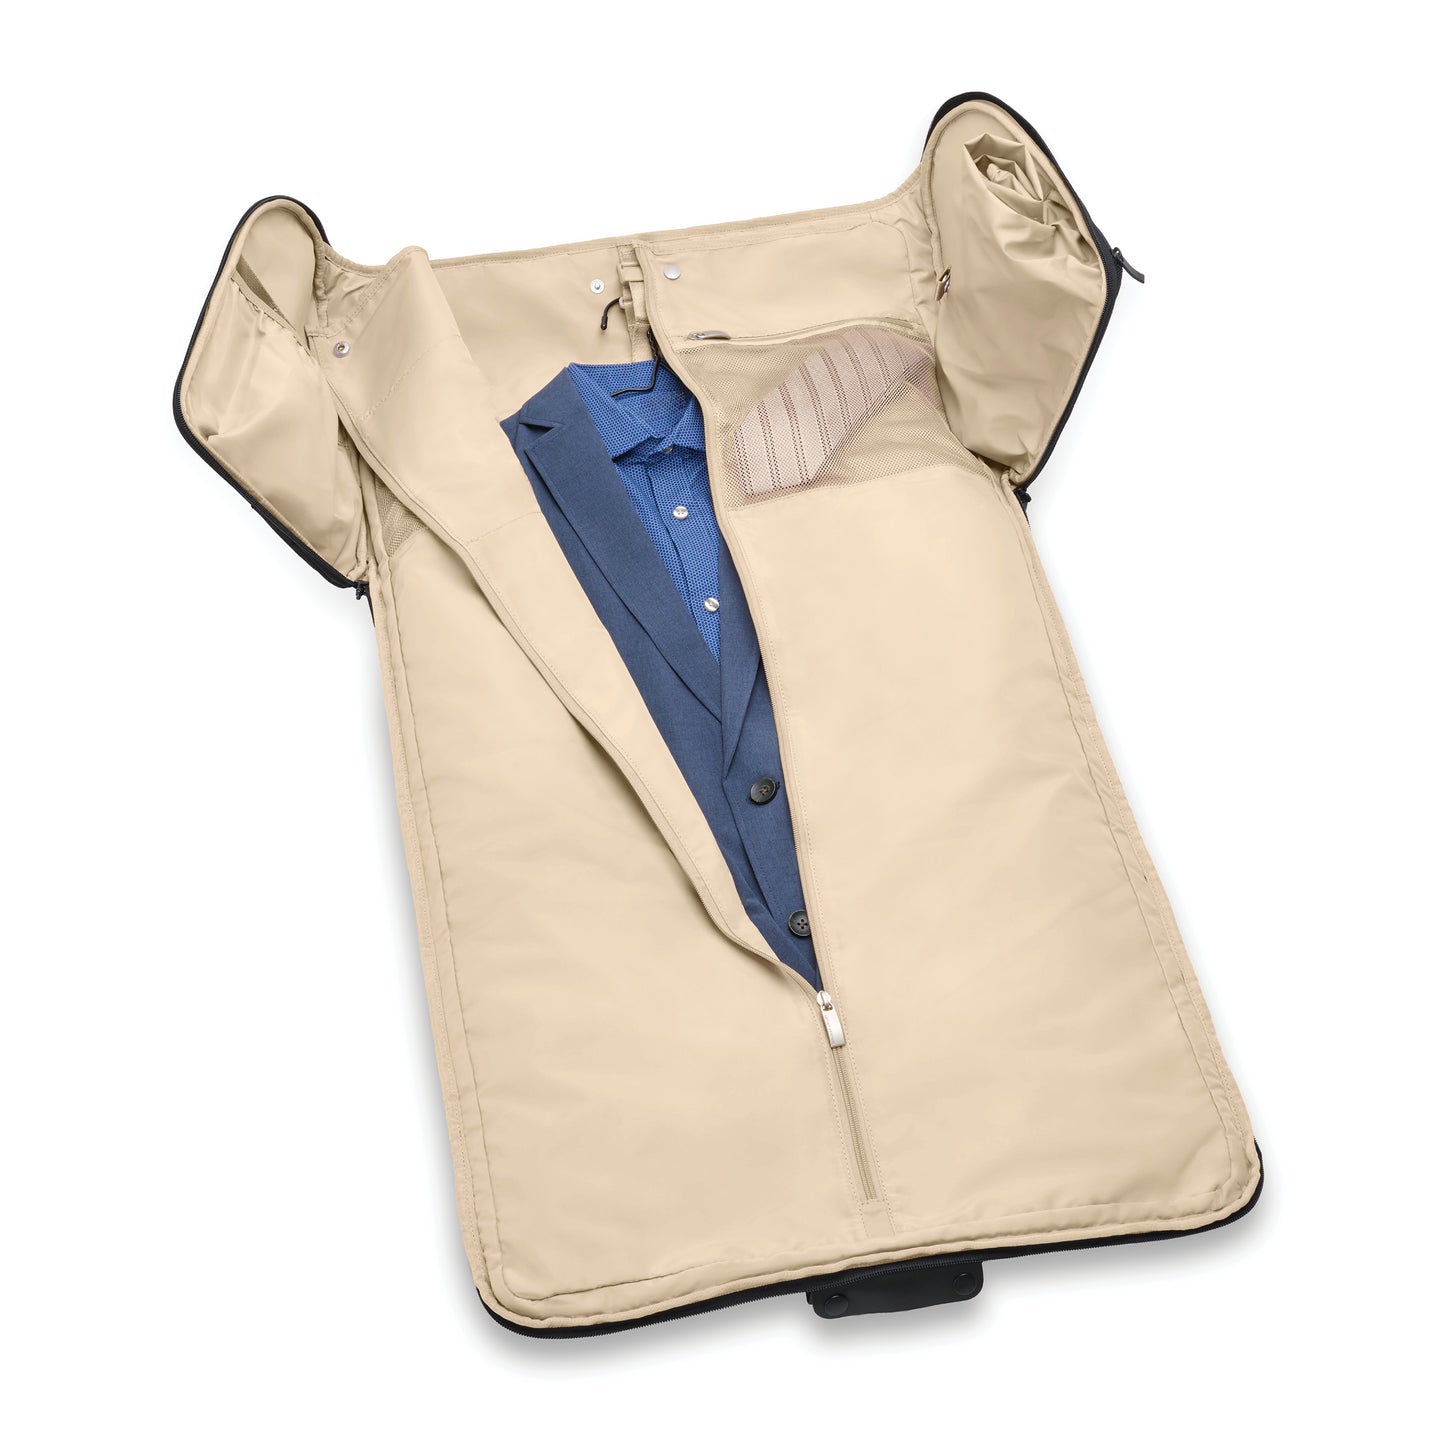 Briggs & Riley Baseline Carry-On Hangable Garment Duffle